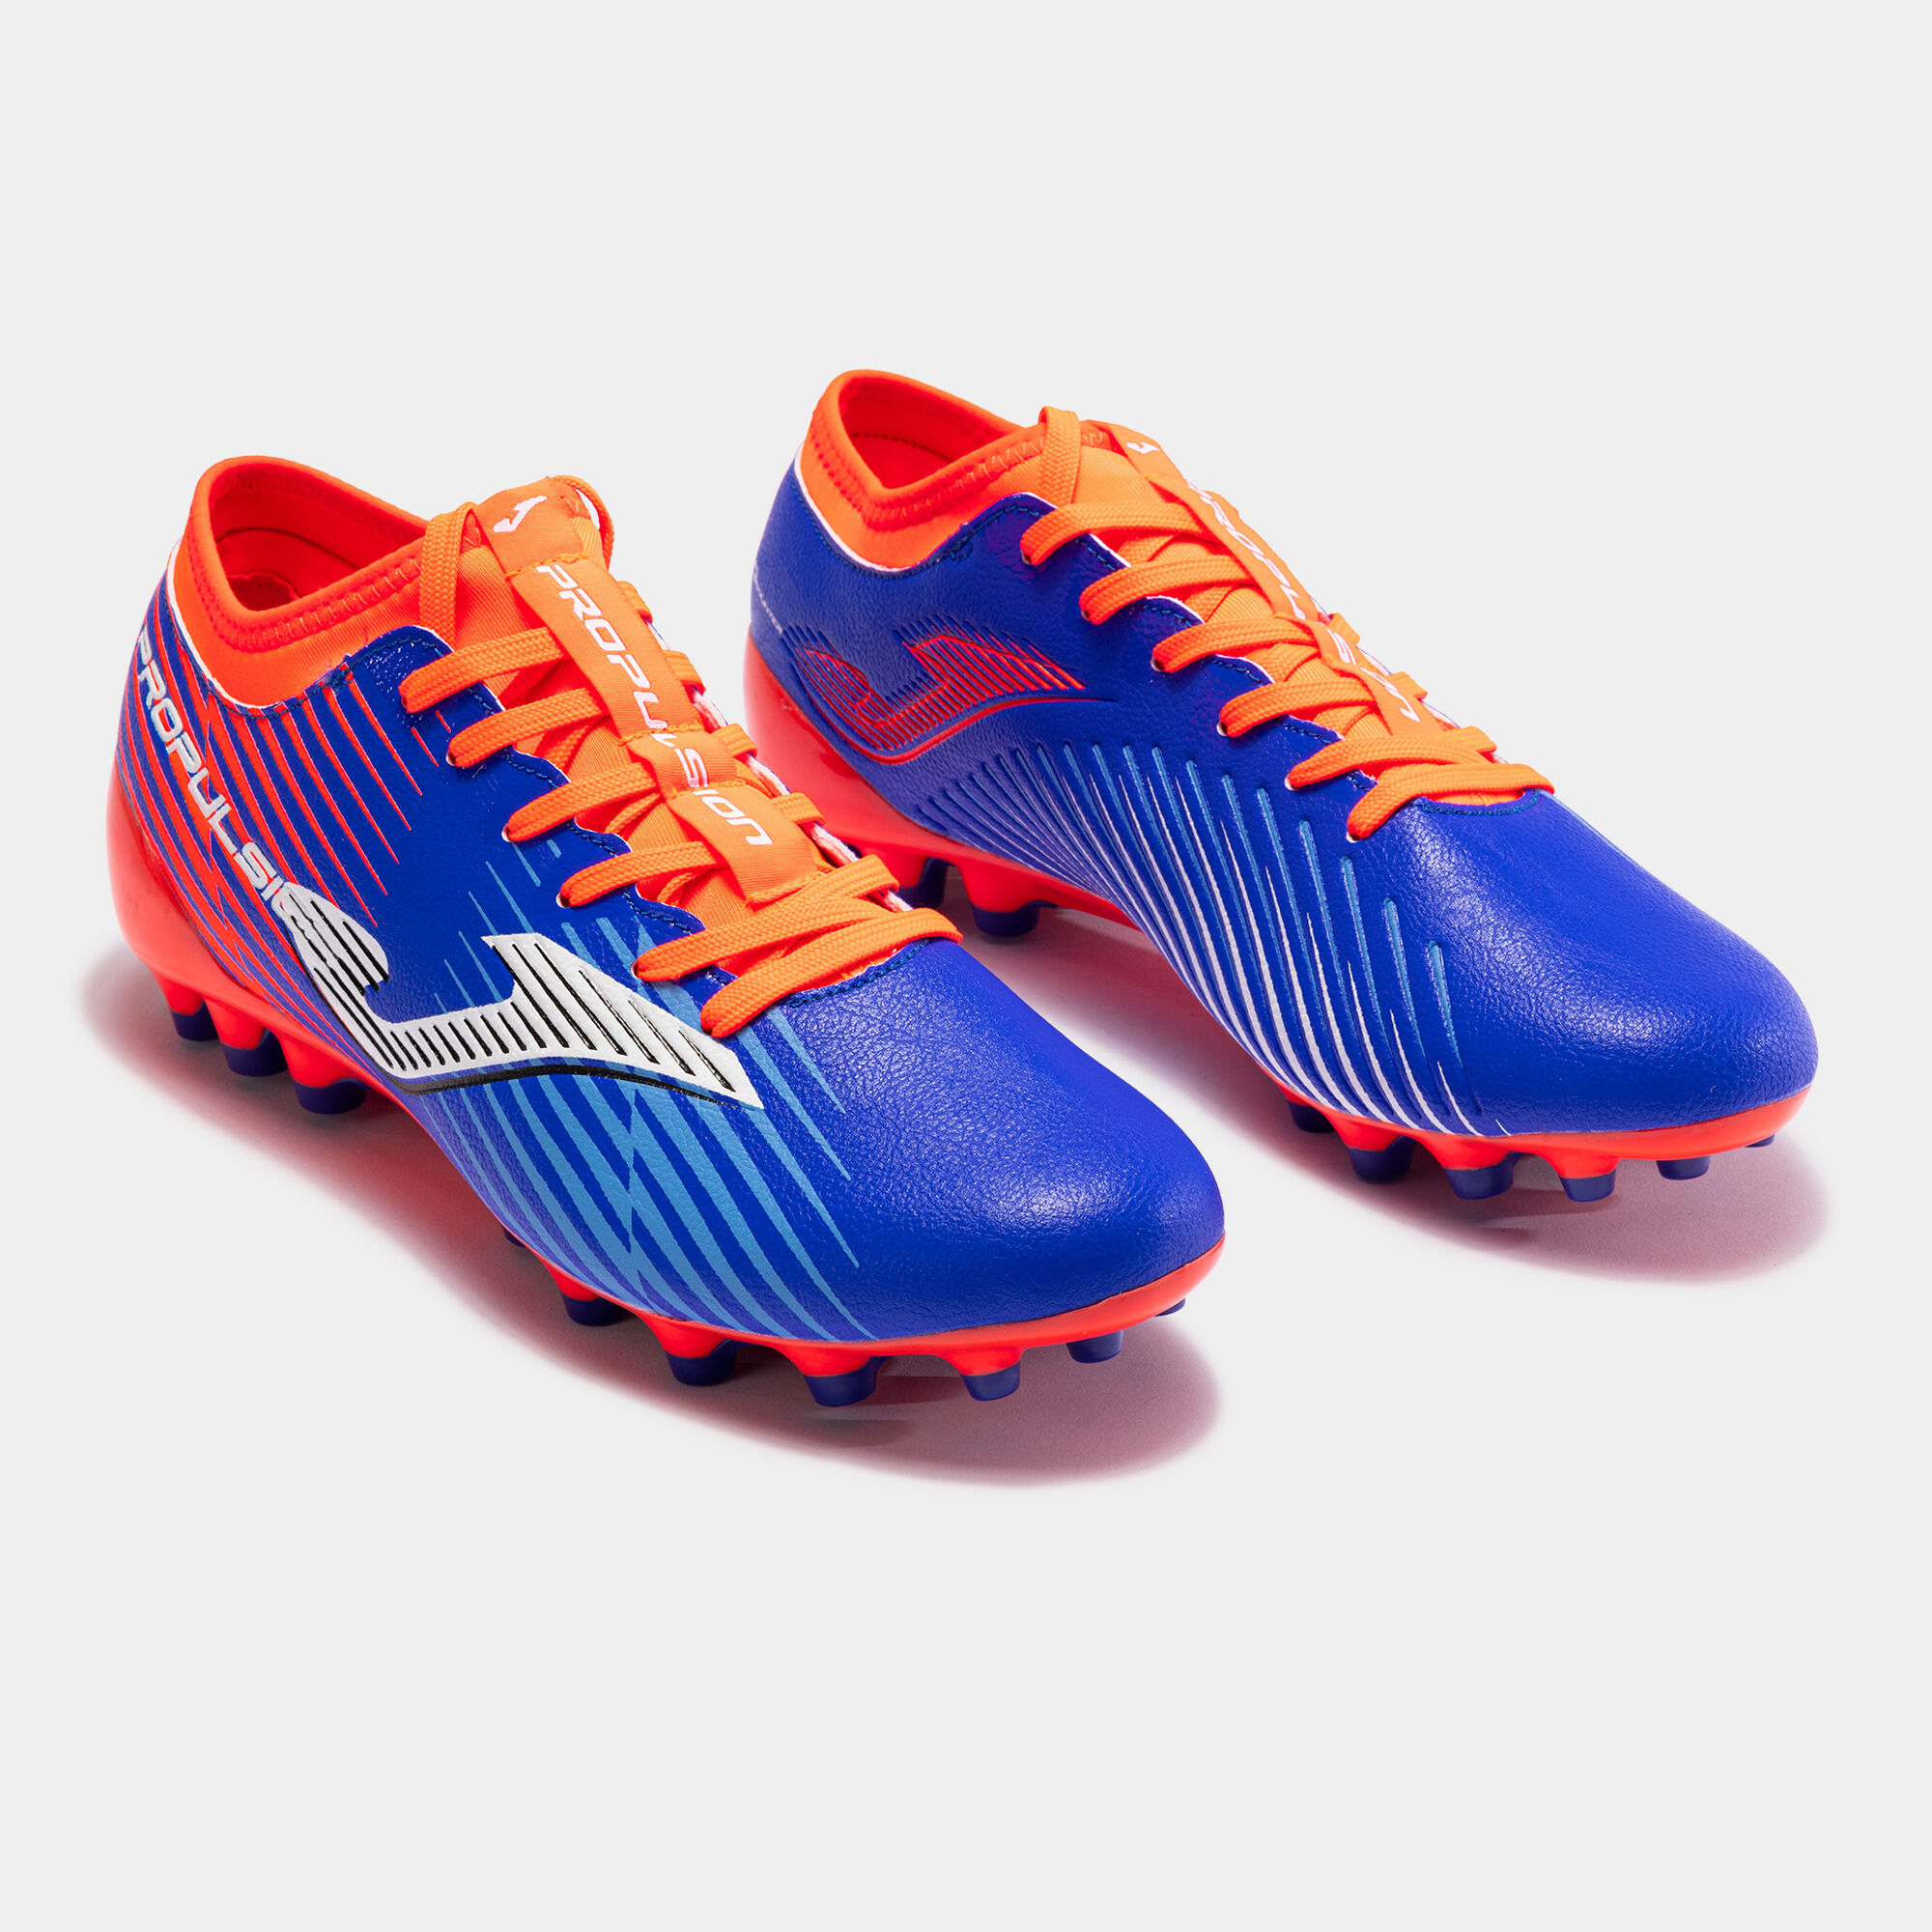 Chaussures football Propulsion Cup 23 gazon synthétique AG bleu roi orange fluo